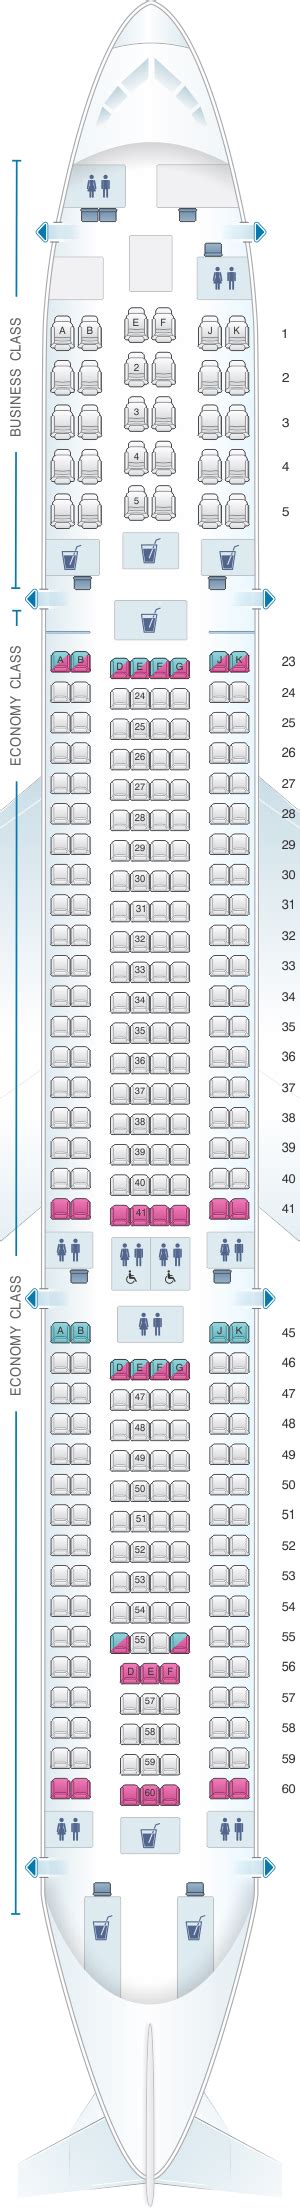 Seat Map Qantas Airways Airbus A330 300